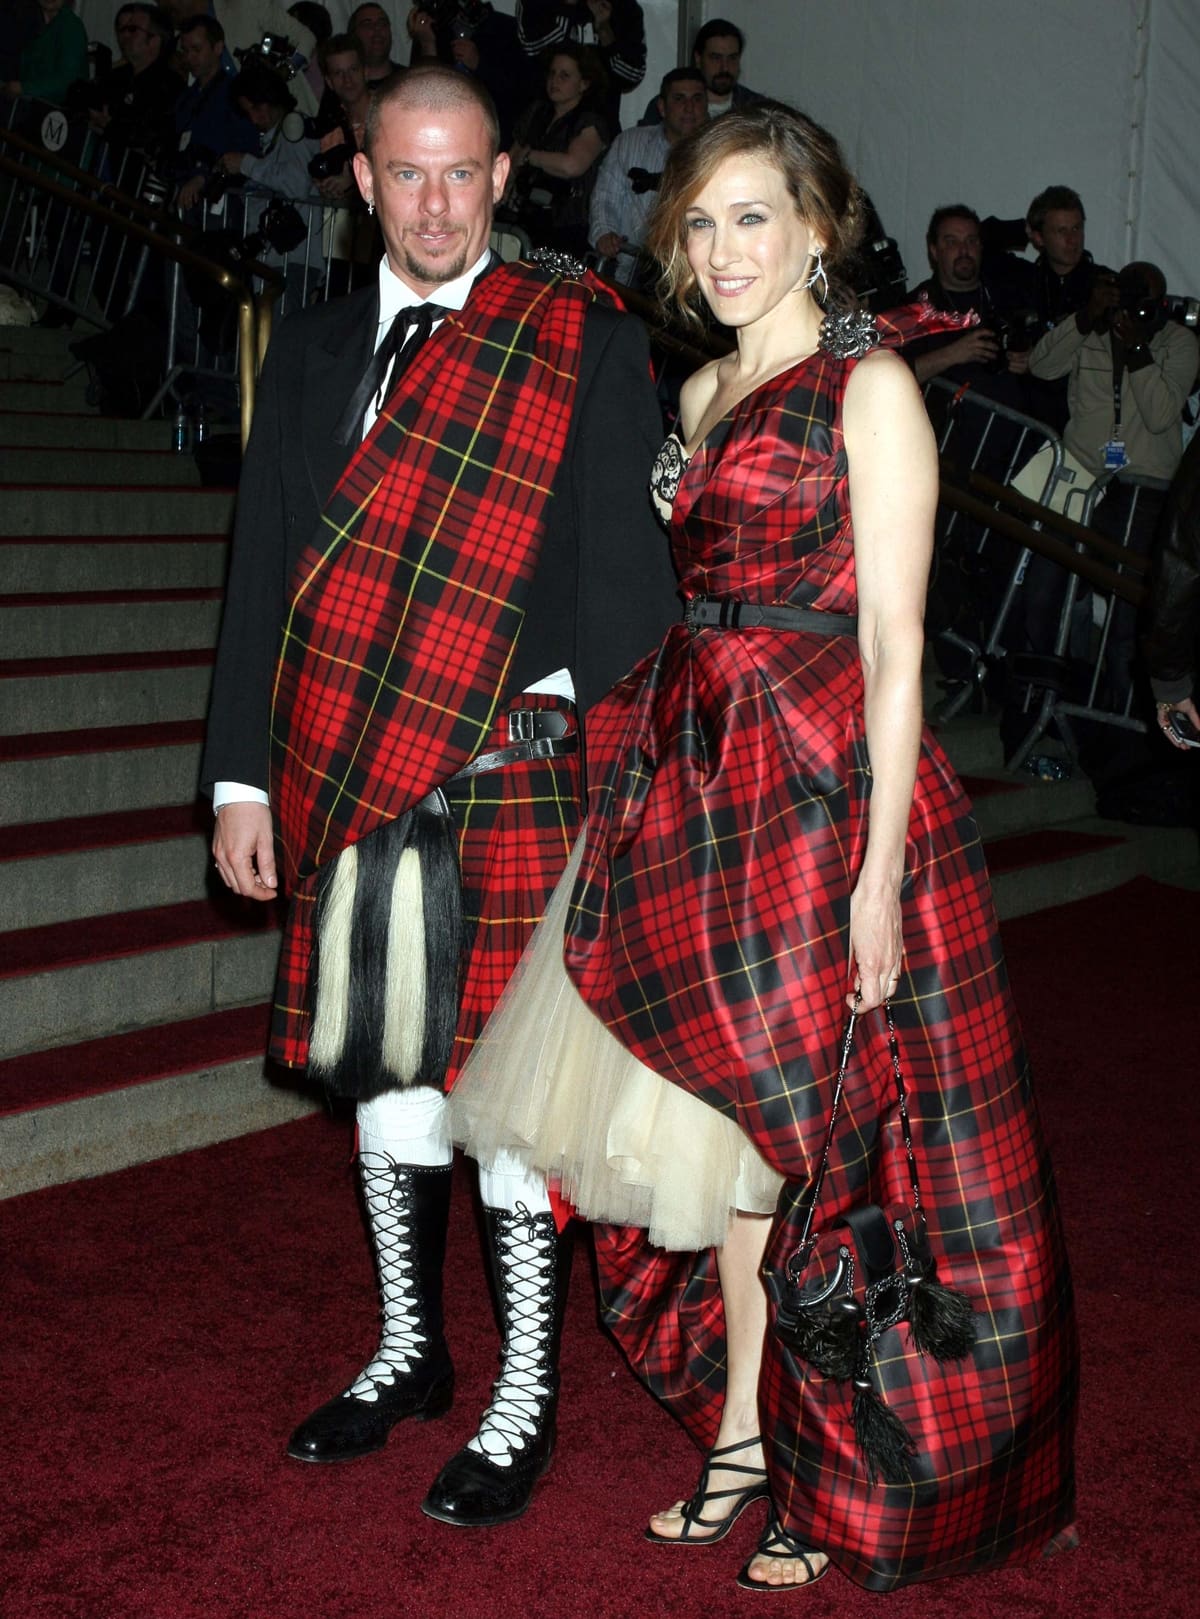 Alexander McQueen and Sarah Jessica Parker attend The Metropolitan Museum of Art Costume Institute Spring 2006 Benefit Gala